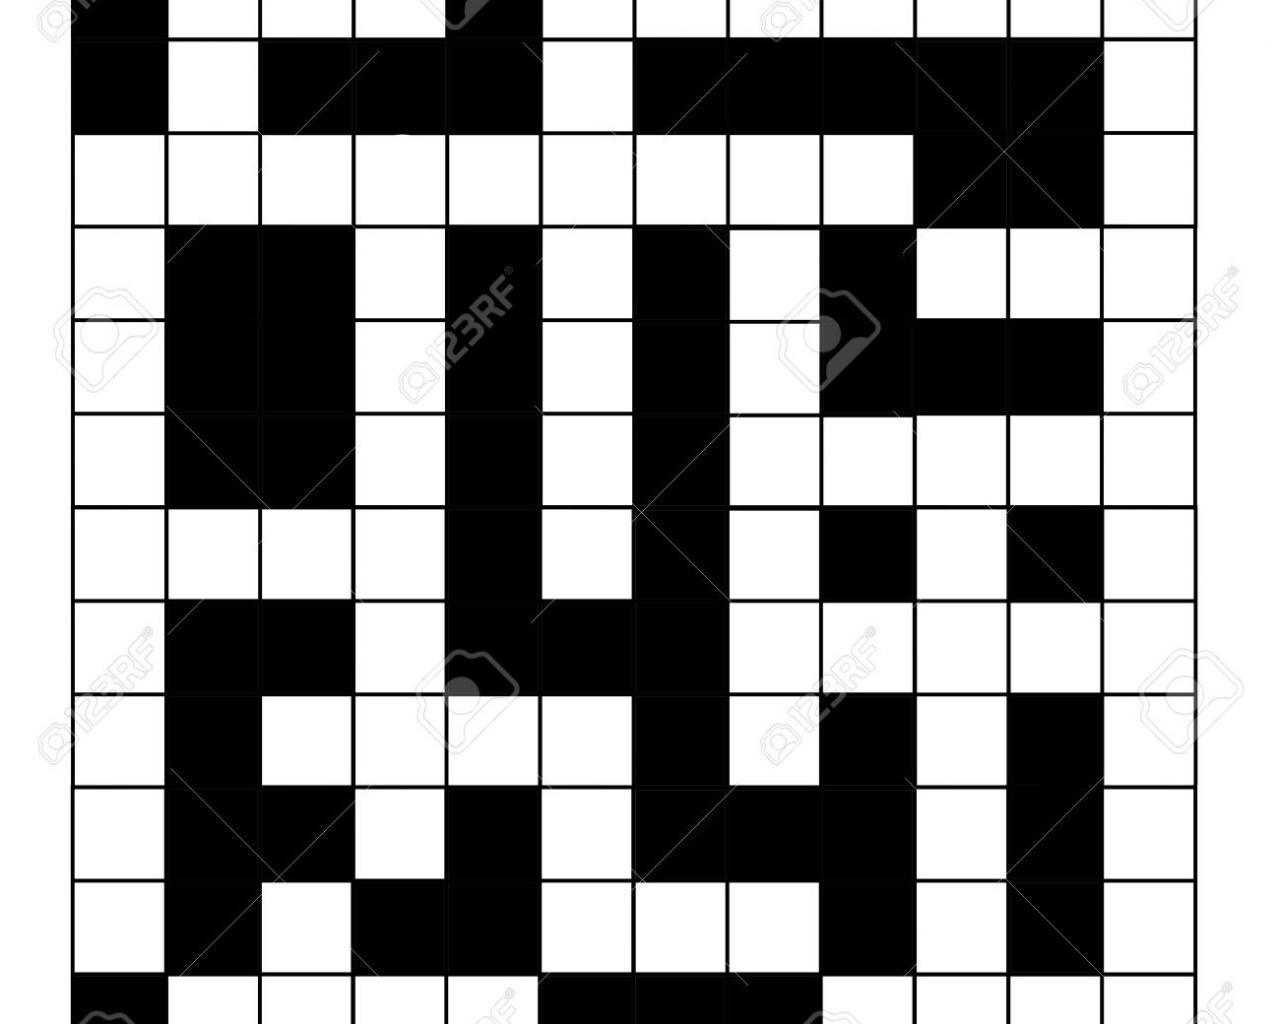 vectors crossword puzzle thinking Wallpaper by Loissa99 | Society6